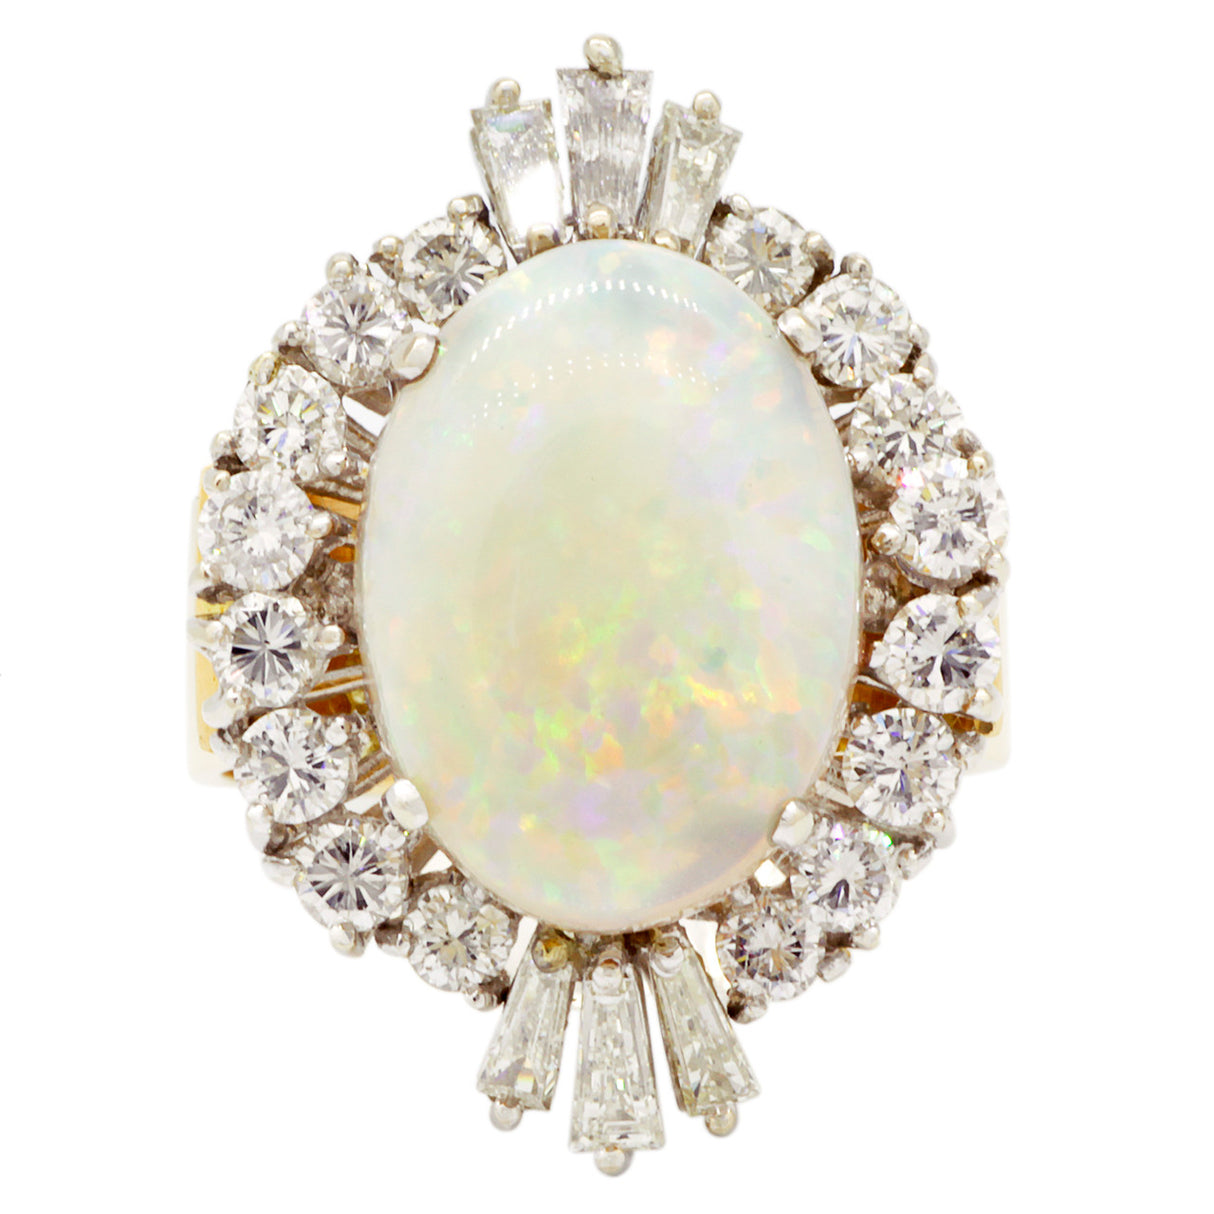 18K Yellow Gold 5.26 Carat Opal Diamond Ring